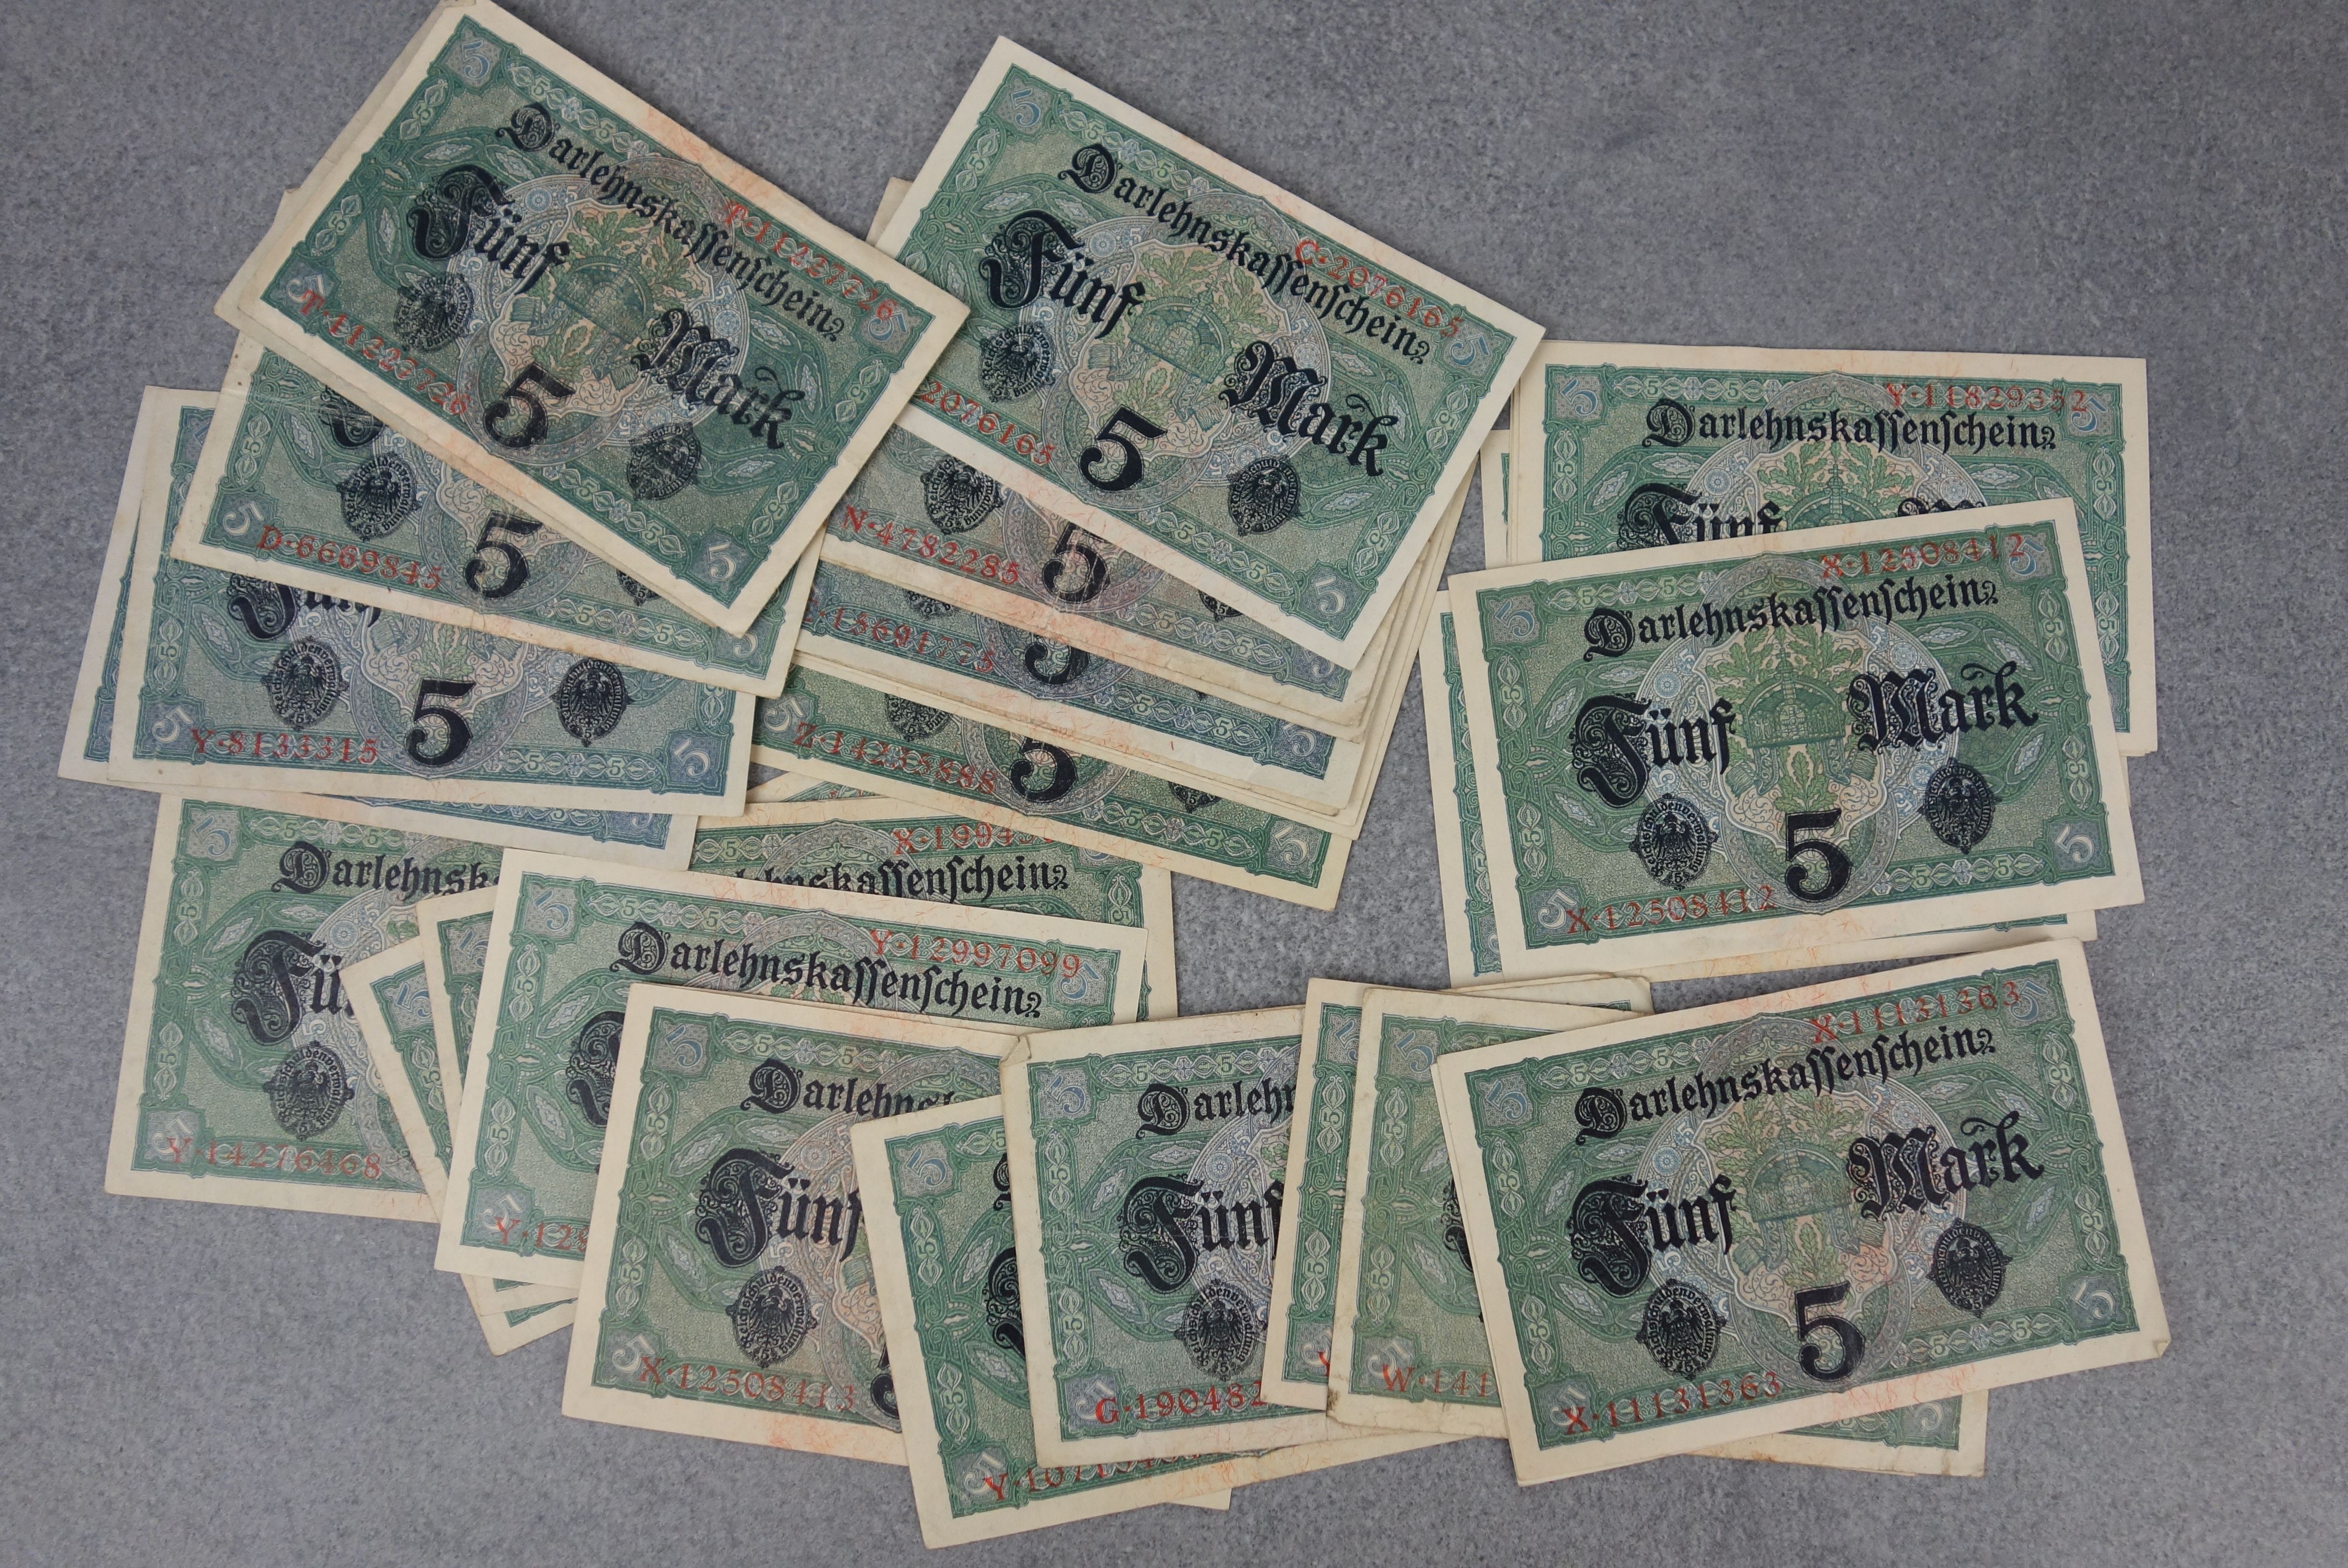 LARGE BUNDLE OF LOAN NOTES / PAPER MONEY / BANKNOTES - Image 19 of 22